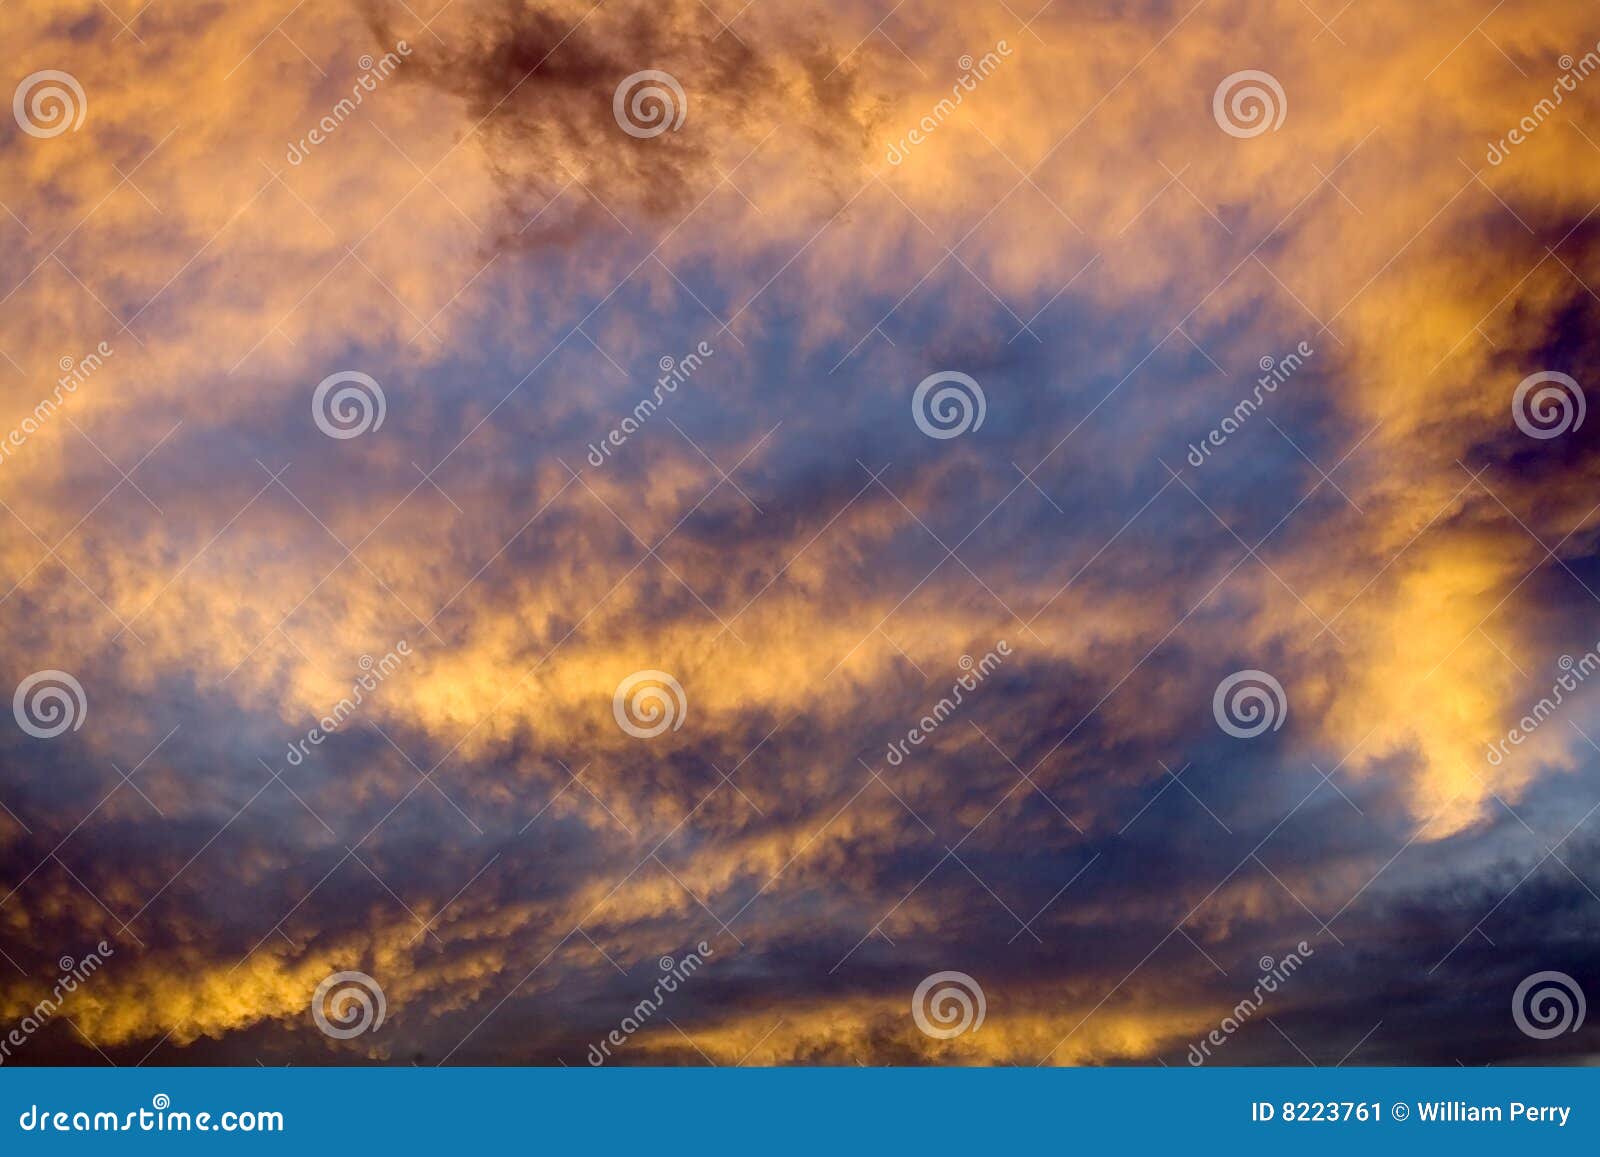 sky abstract at sunset missoula montana